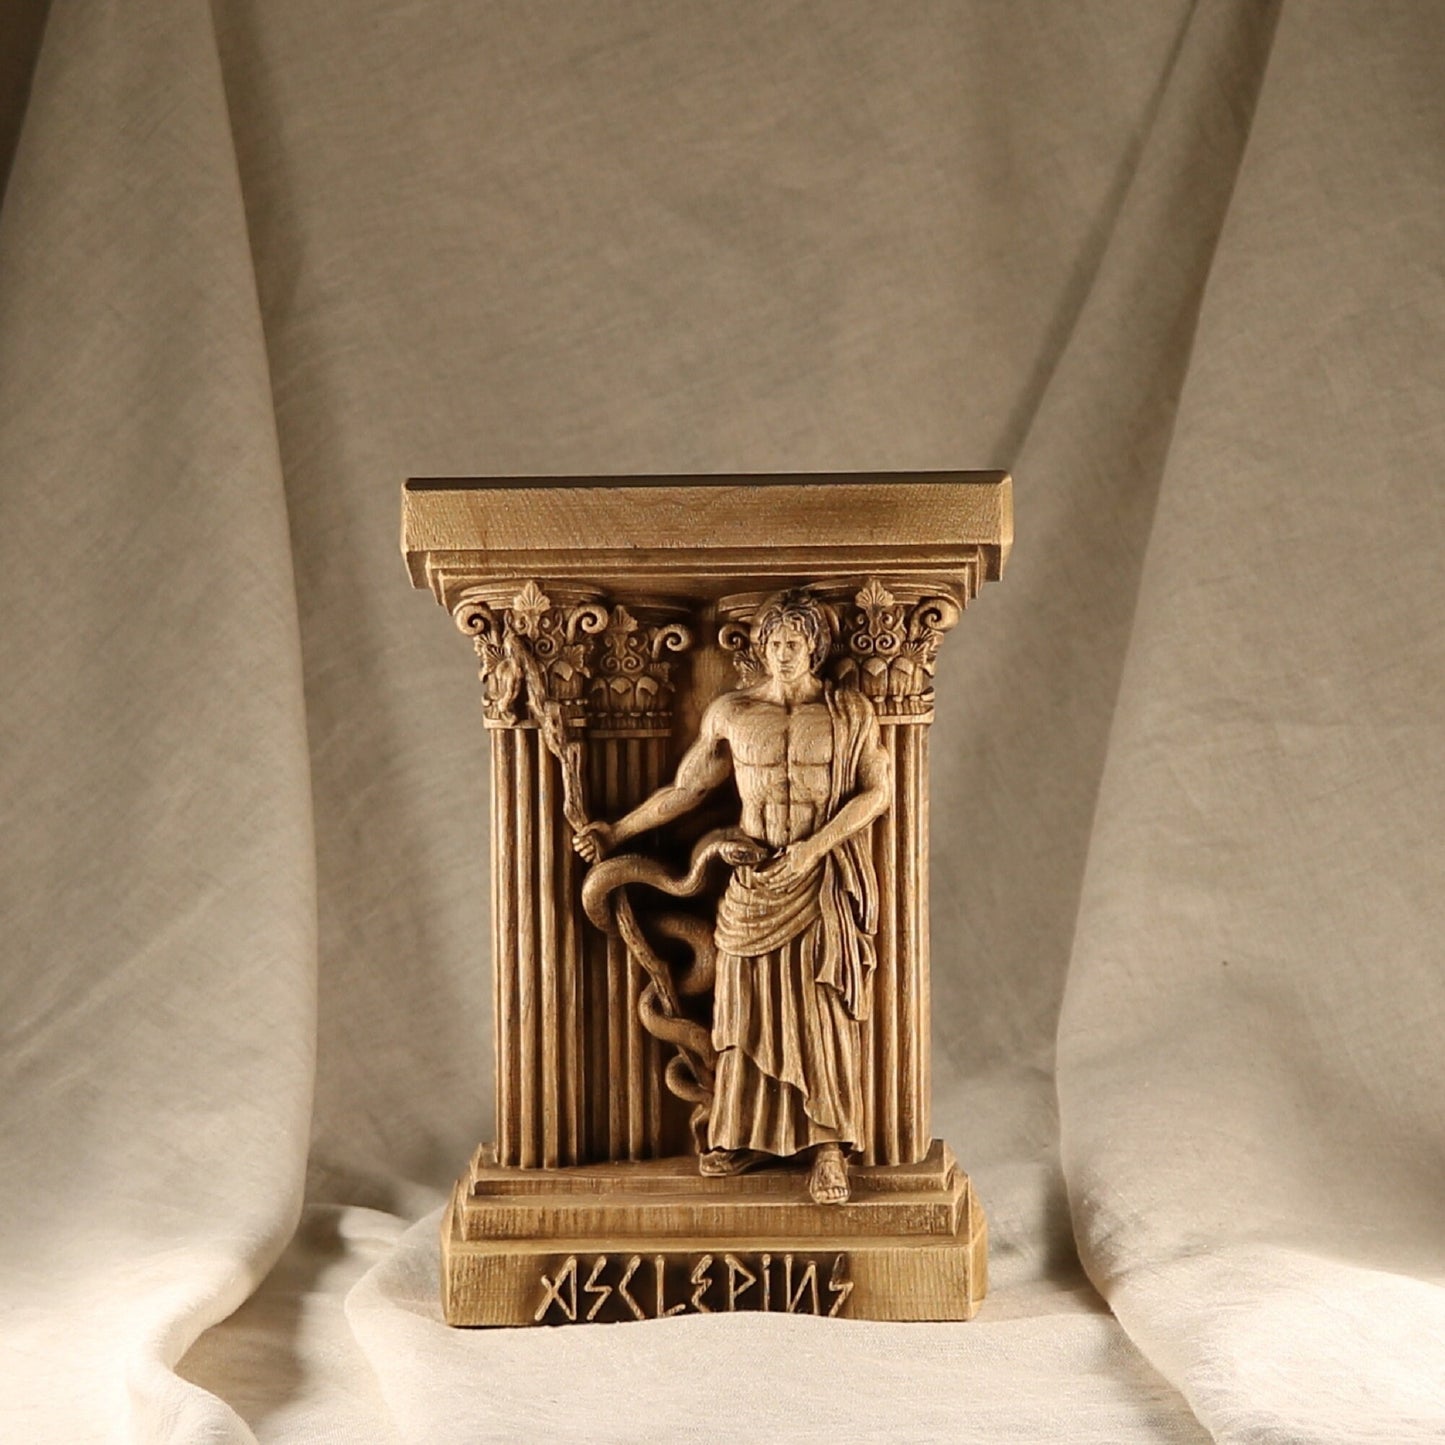 Aristaeus, Antique Greek God, Wooden statue